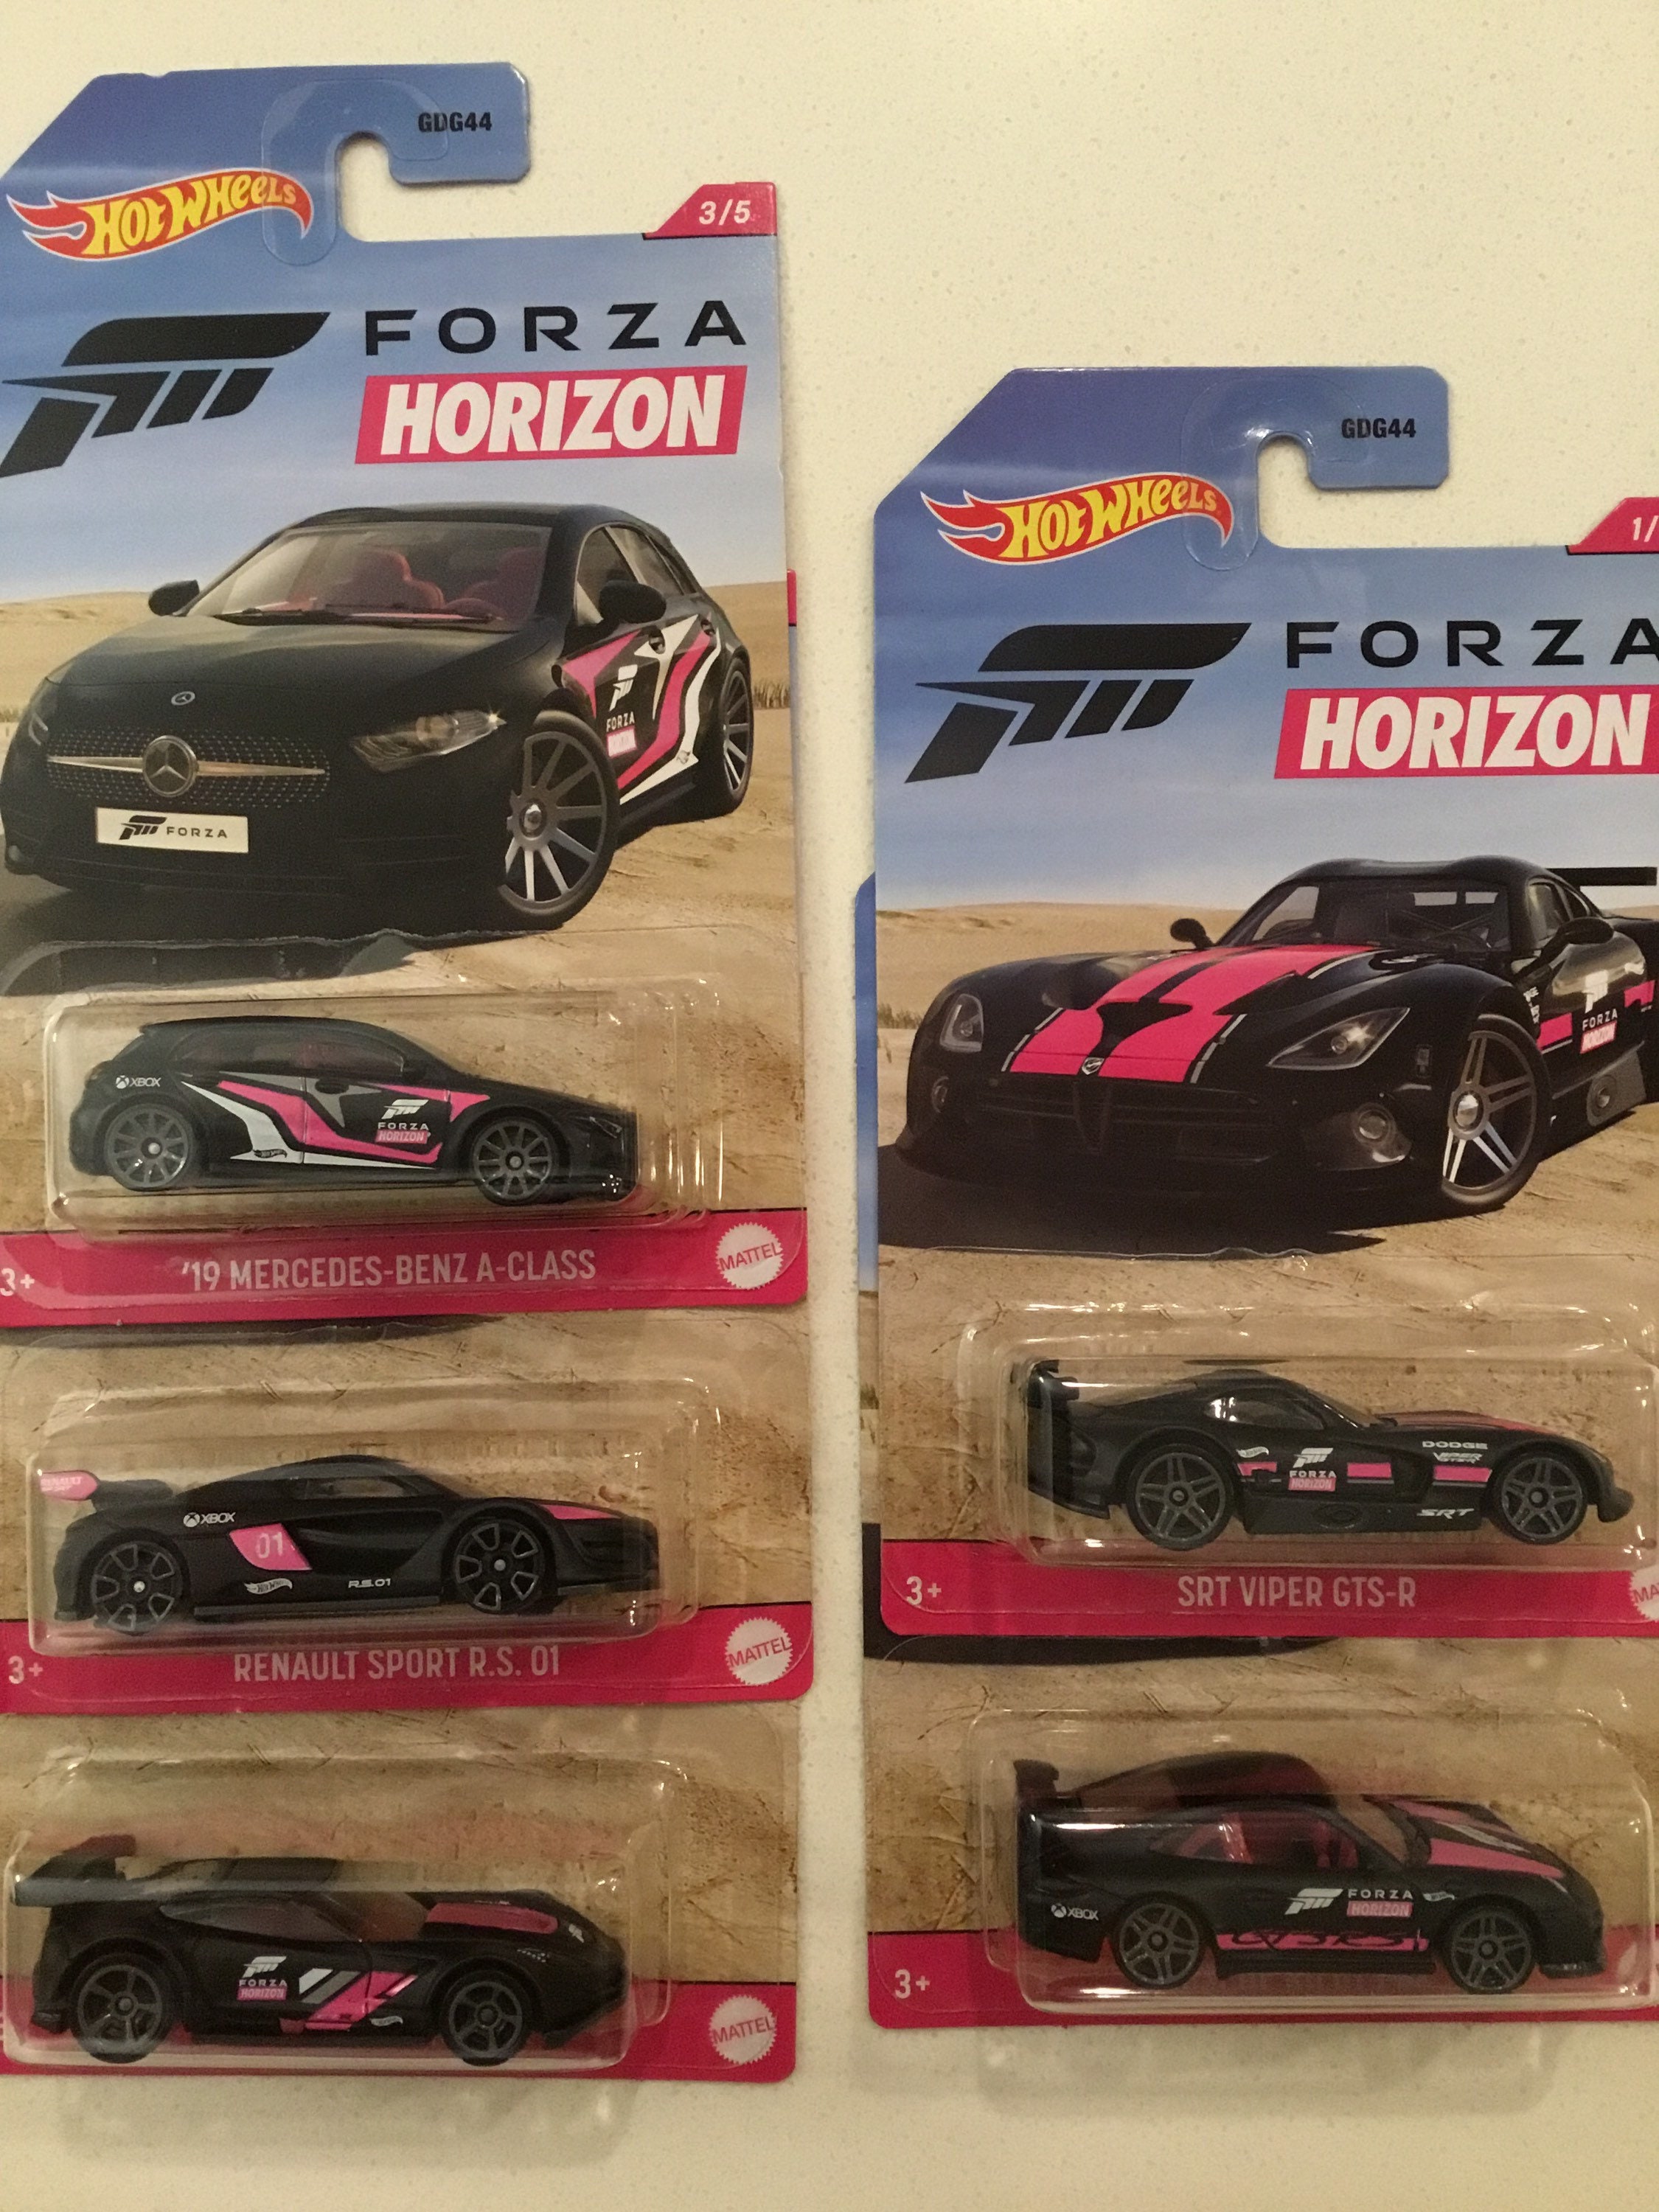 Hot Wheels Forza Horizon GDG44 Juego de 5 figuras de Cars 